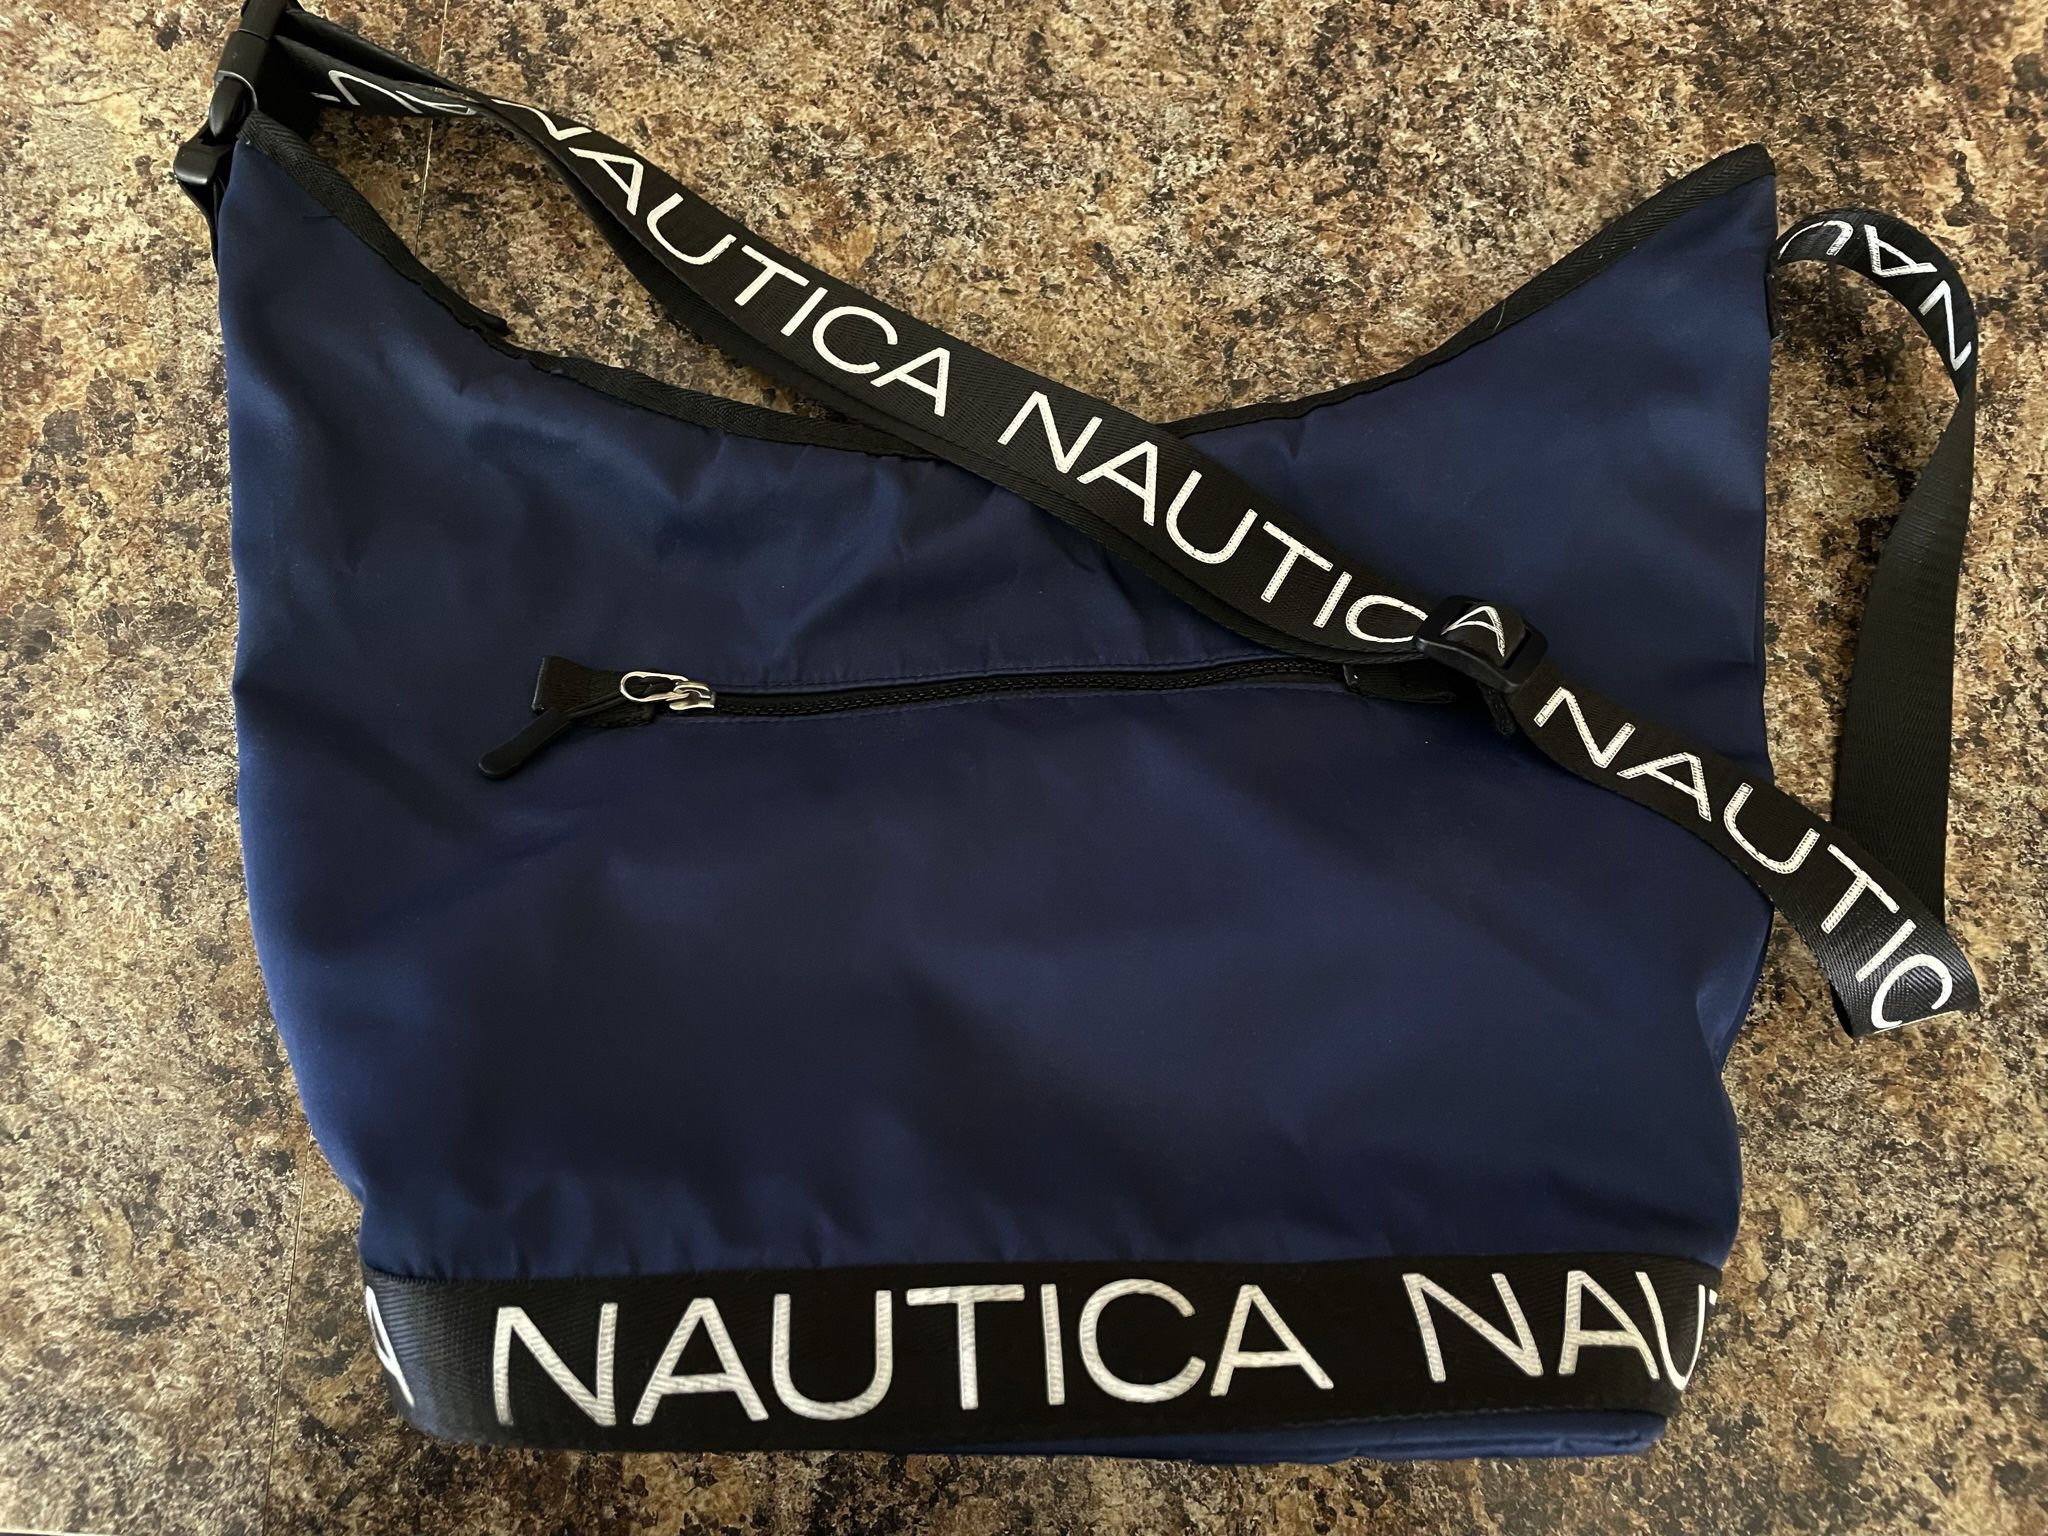 Nautica Hobo Bag